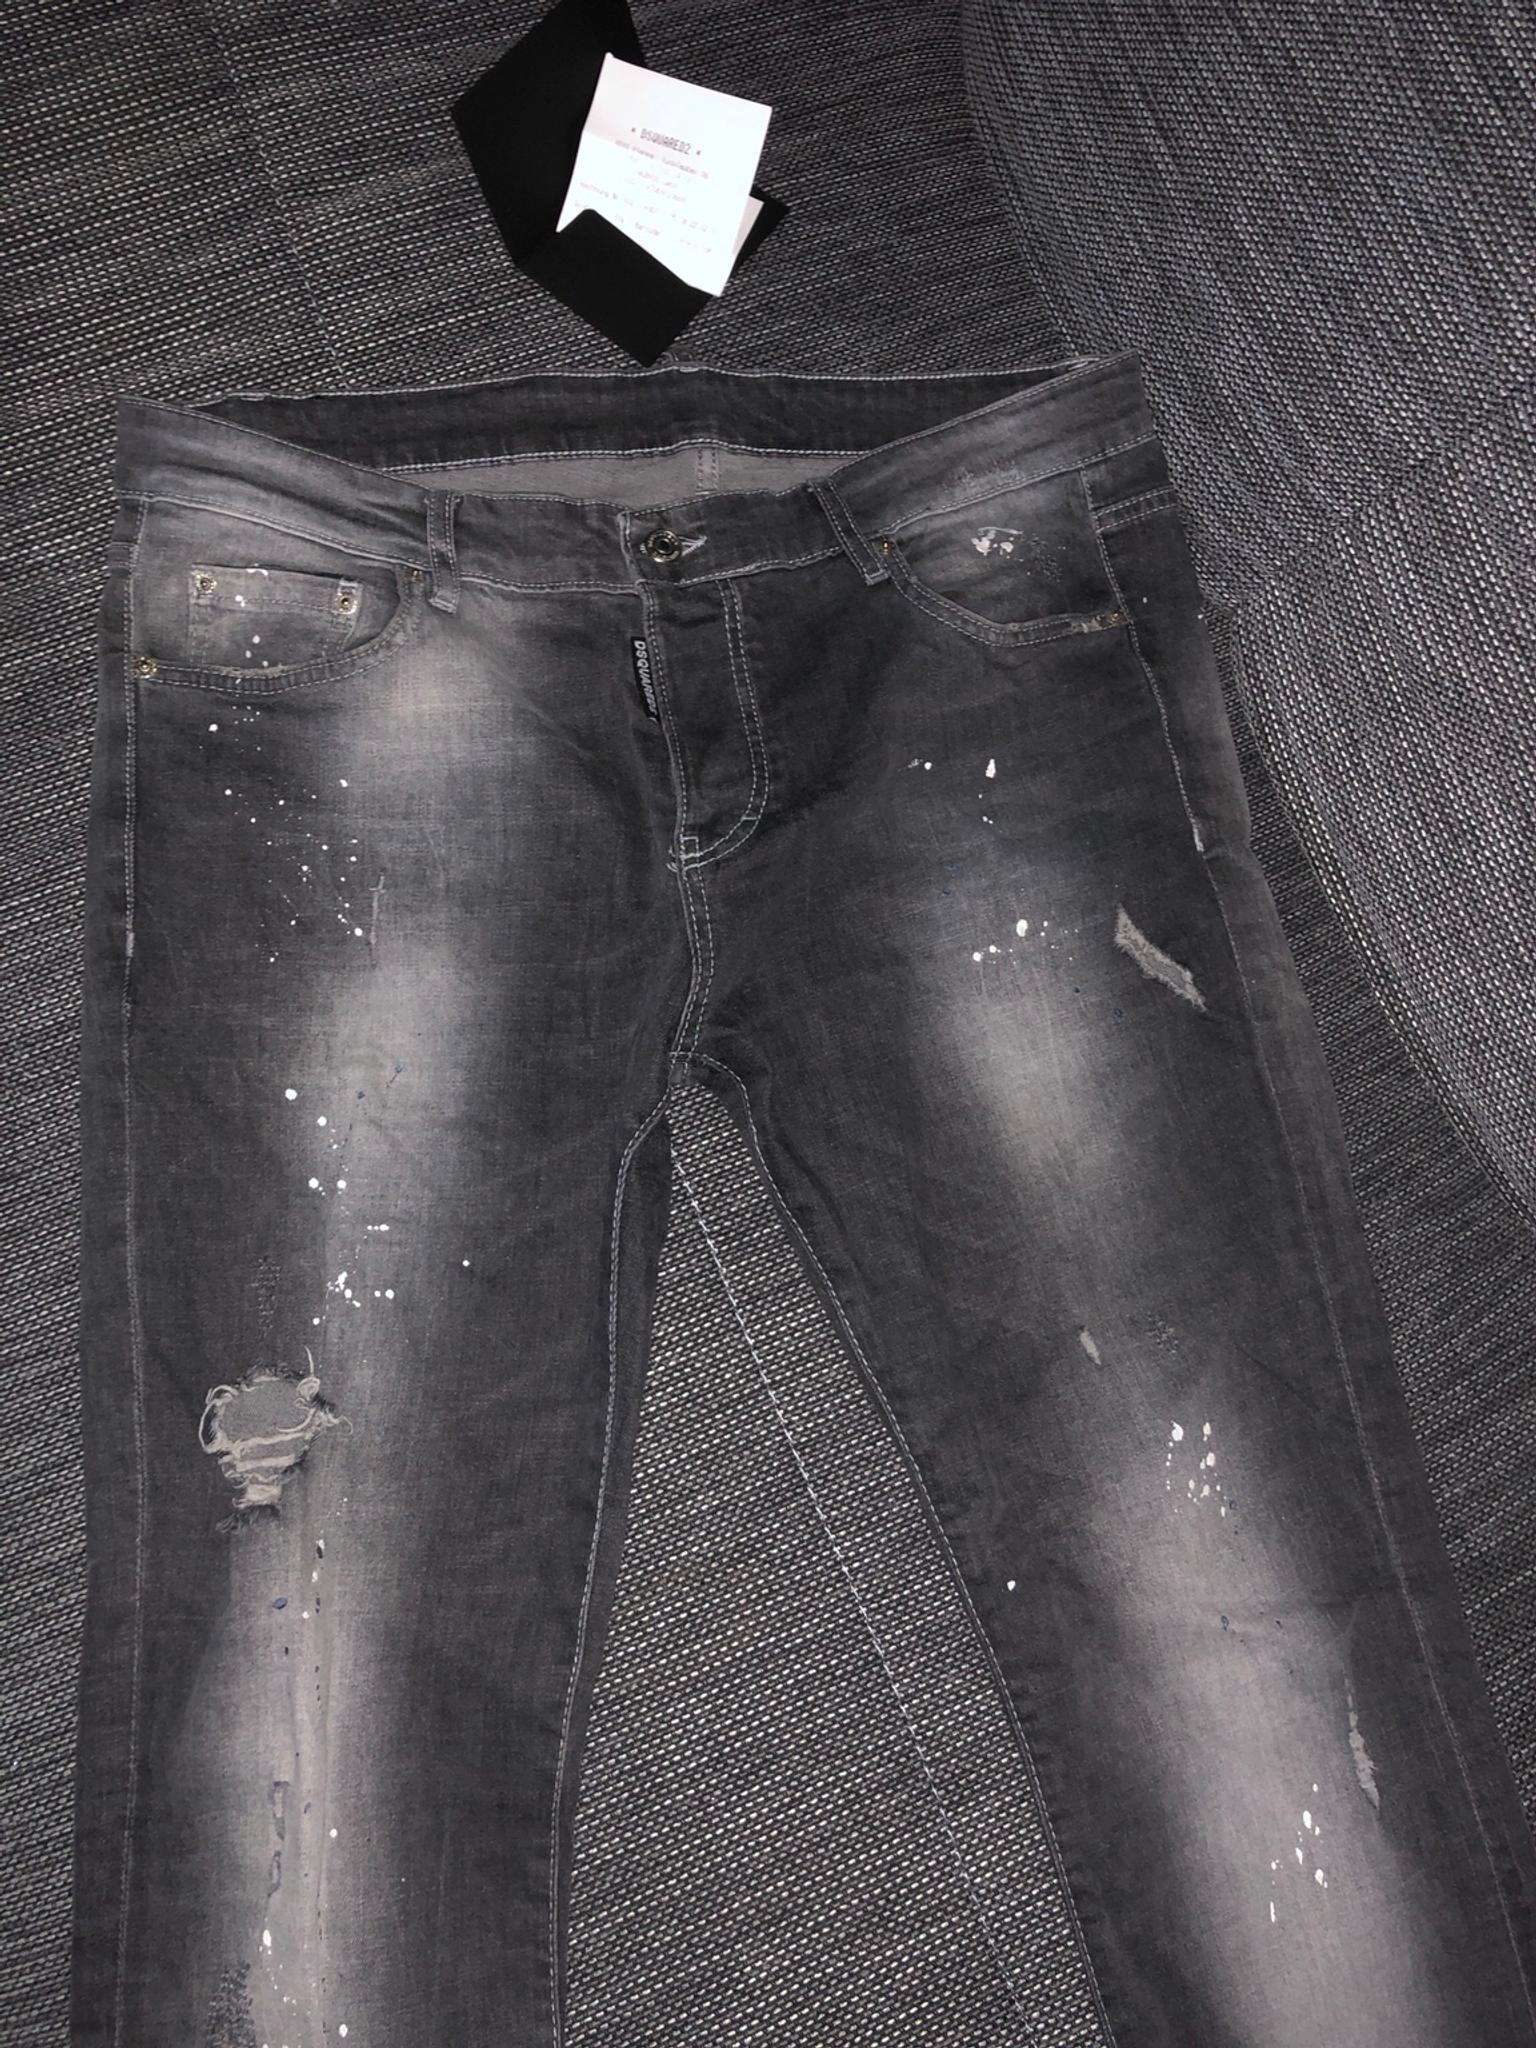 dsquared jeans auf rechnung